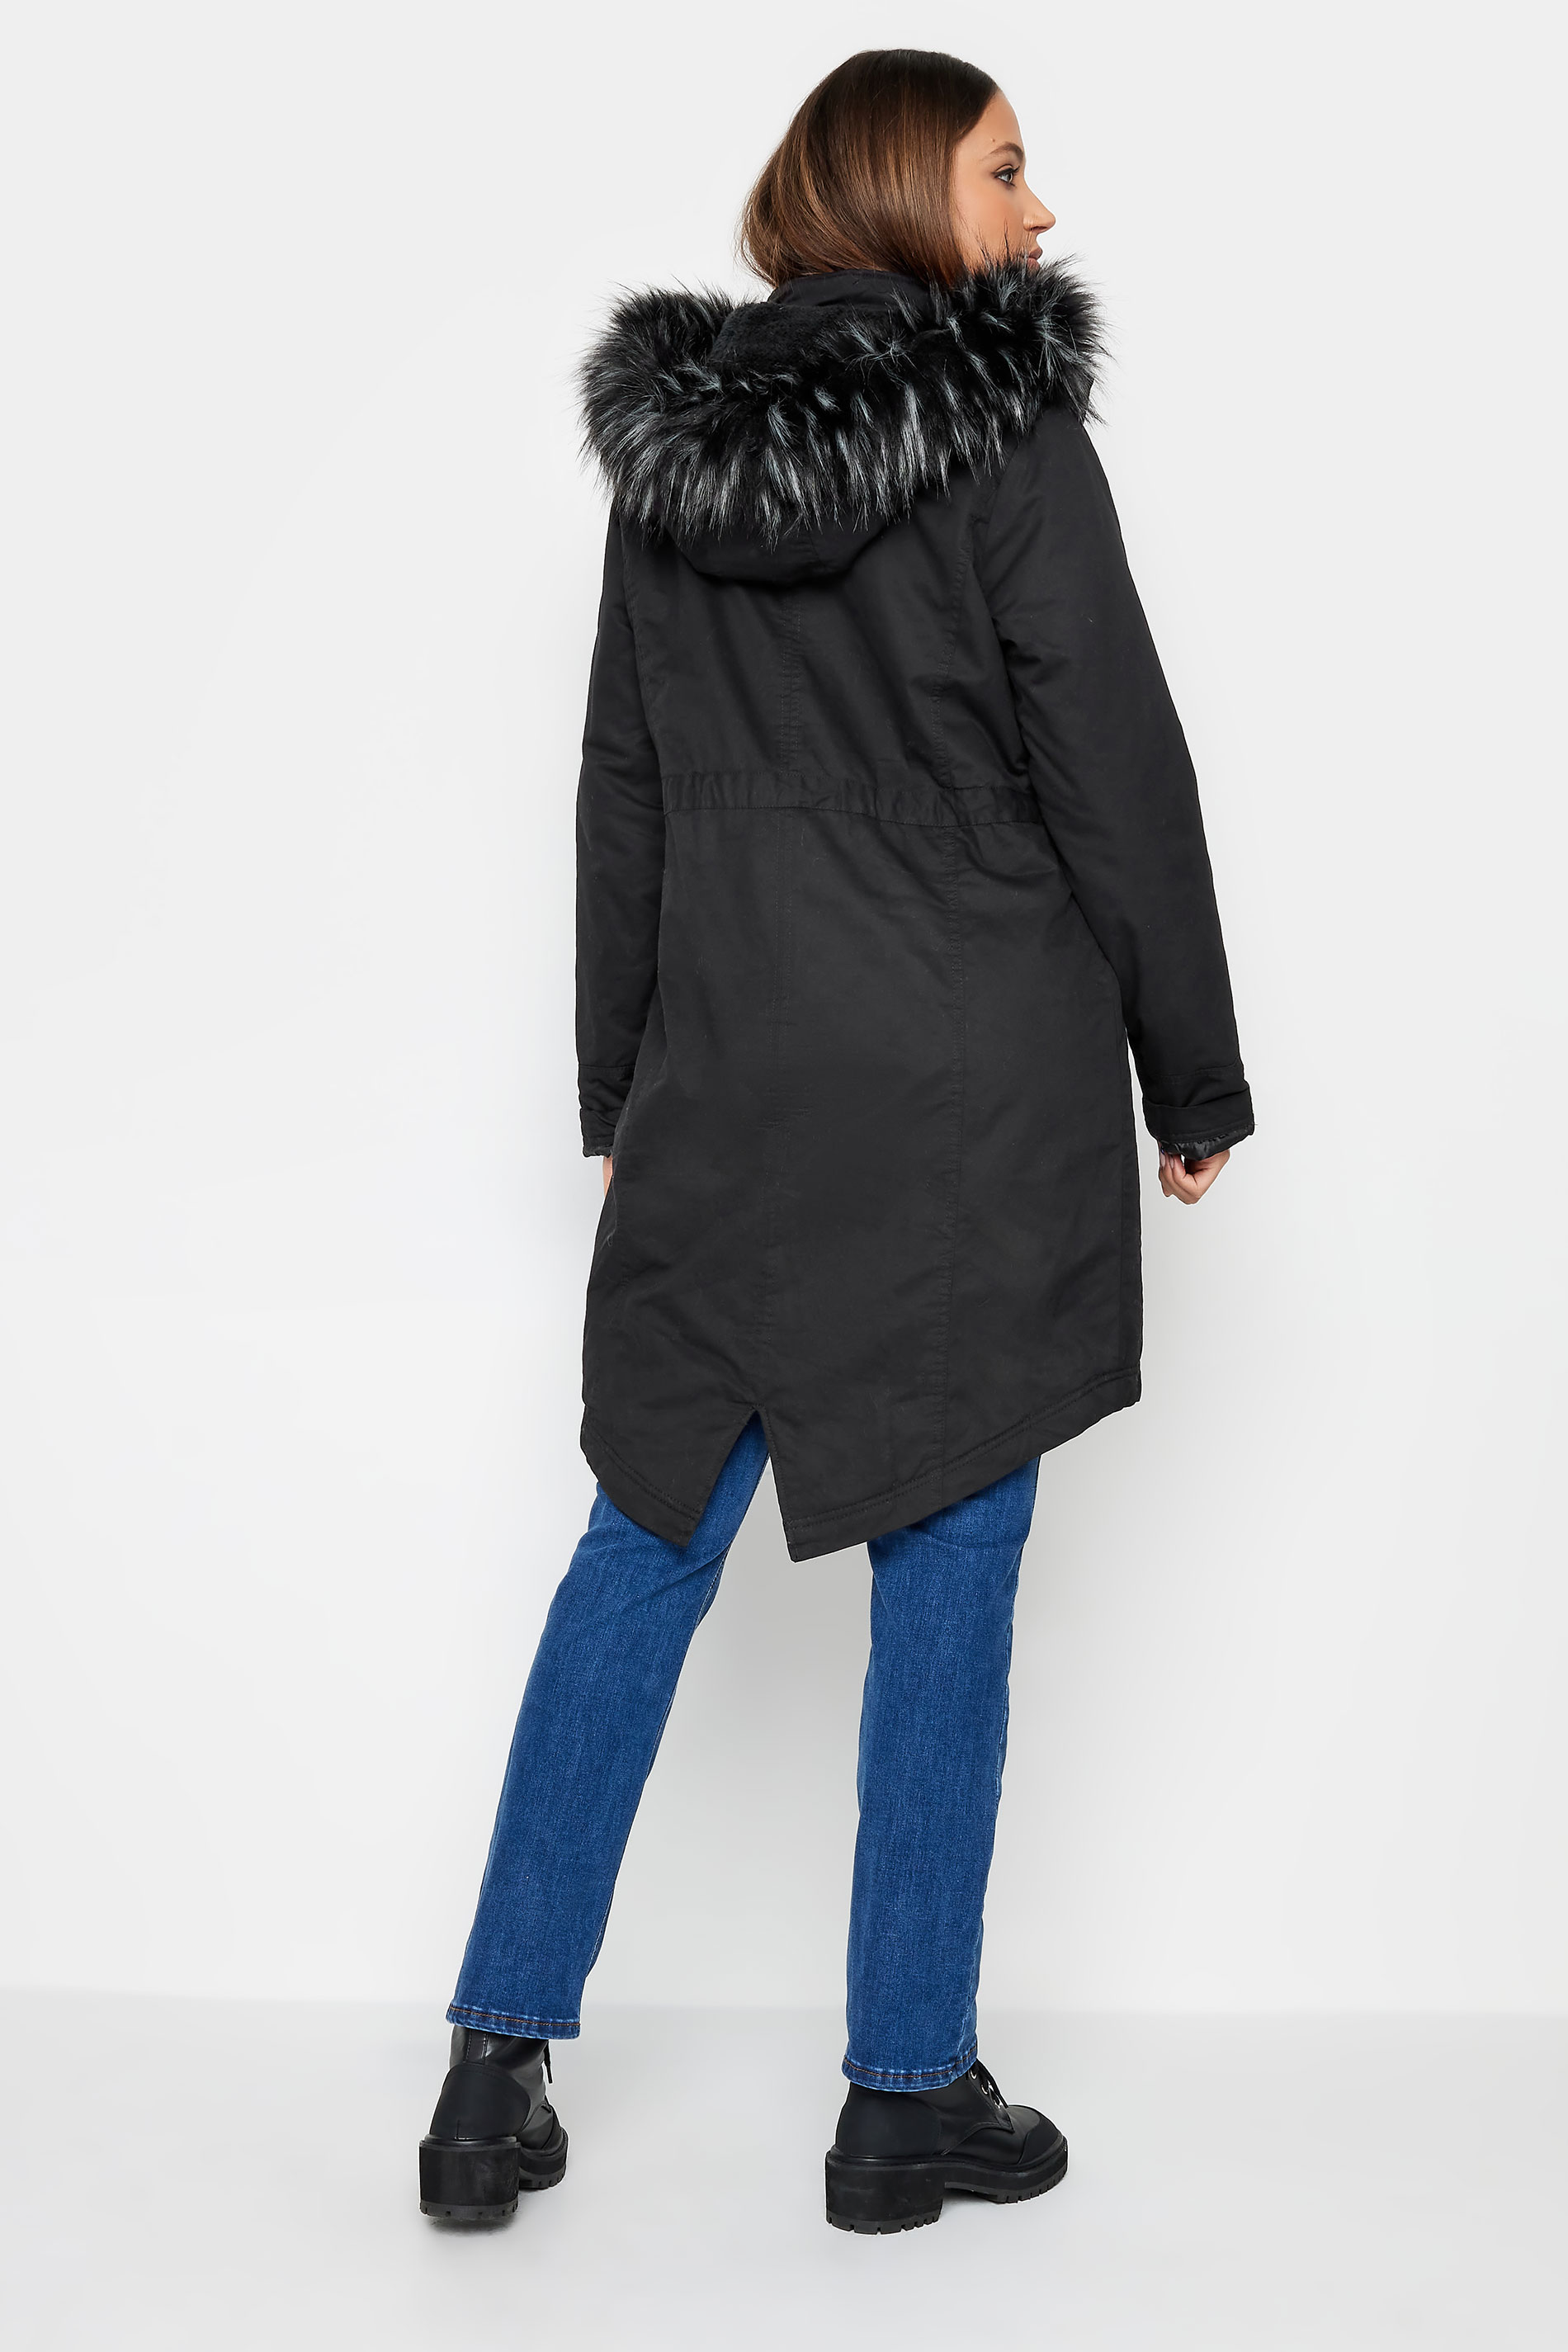 LTS Black Faux Fur Trim Parka | Long Tall Sally 3